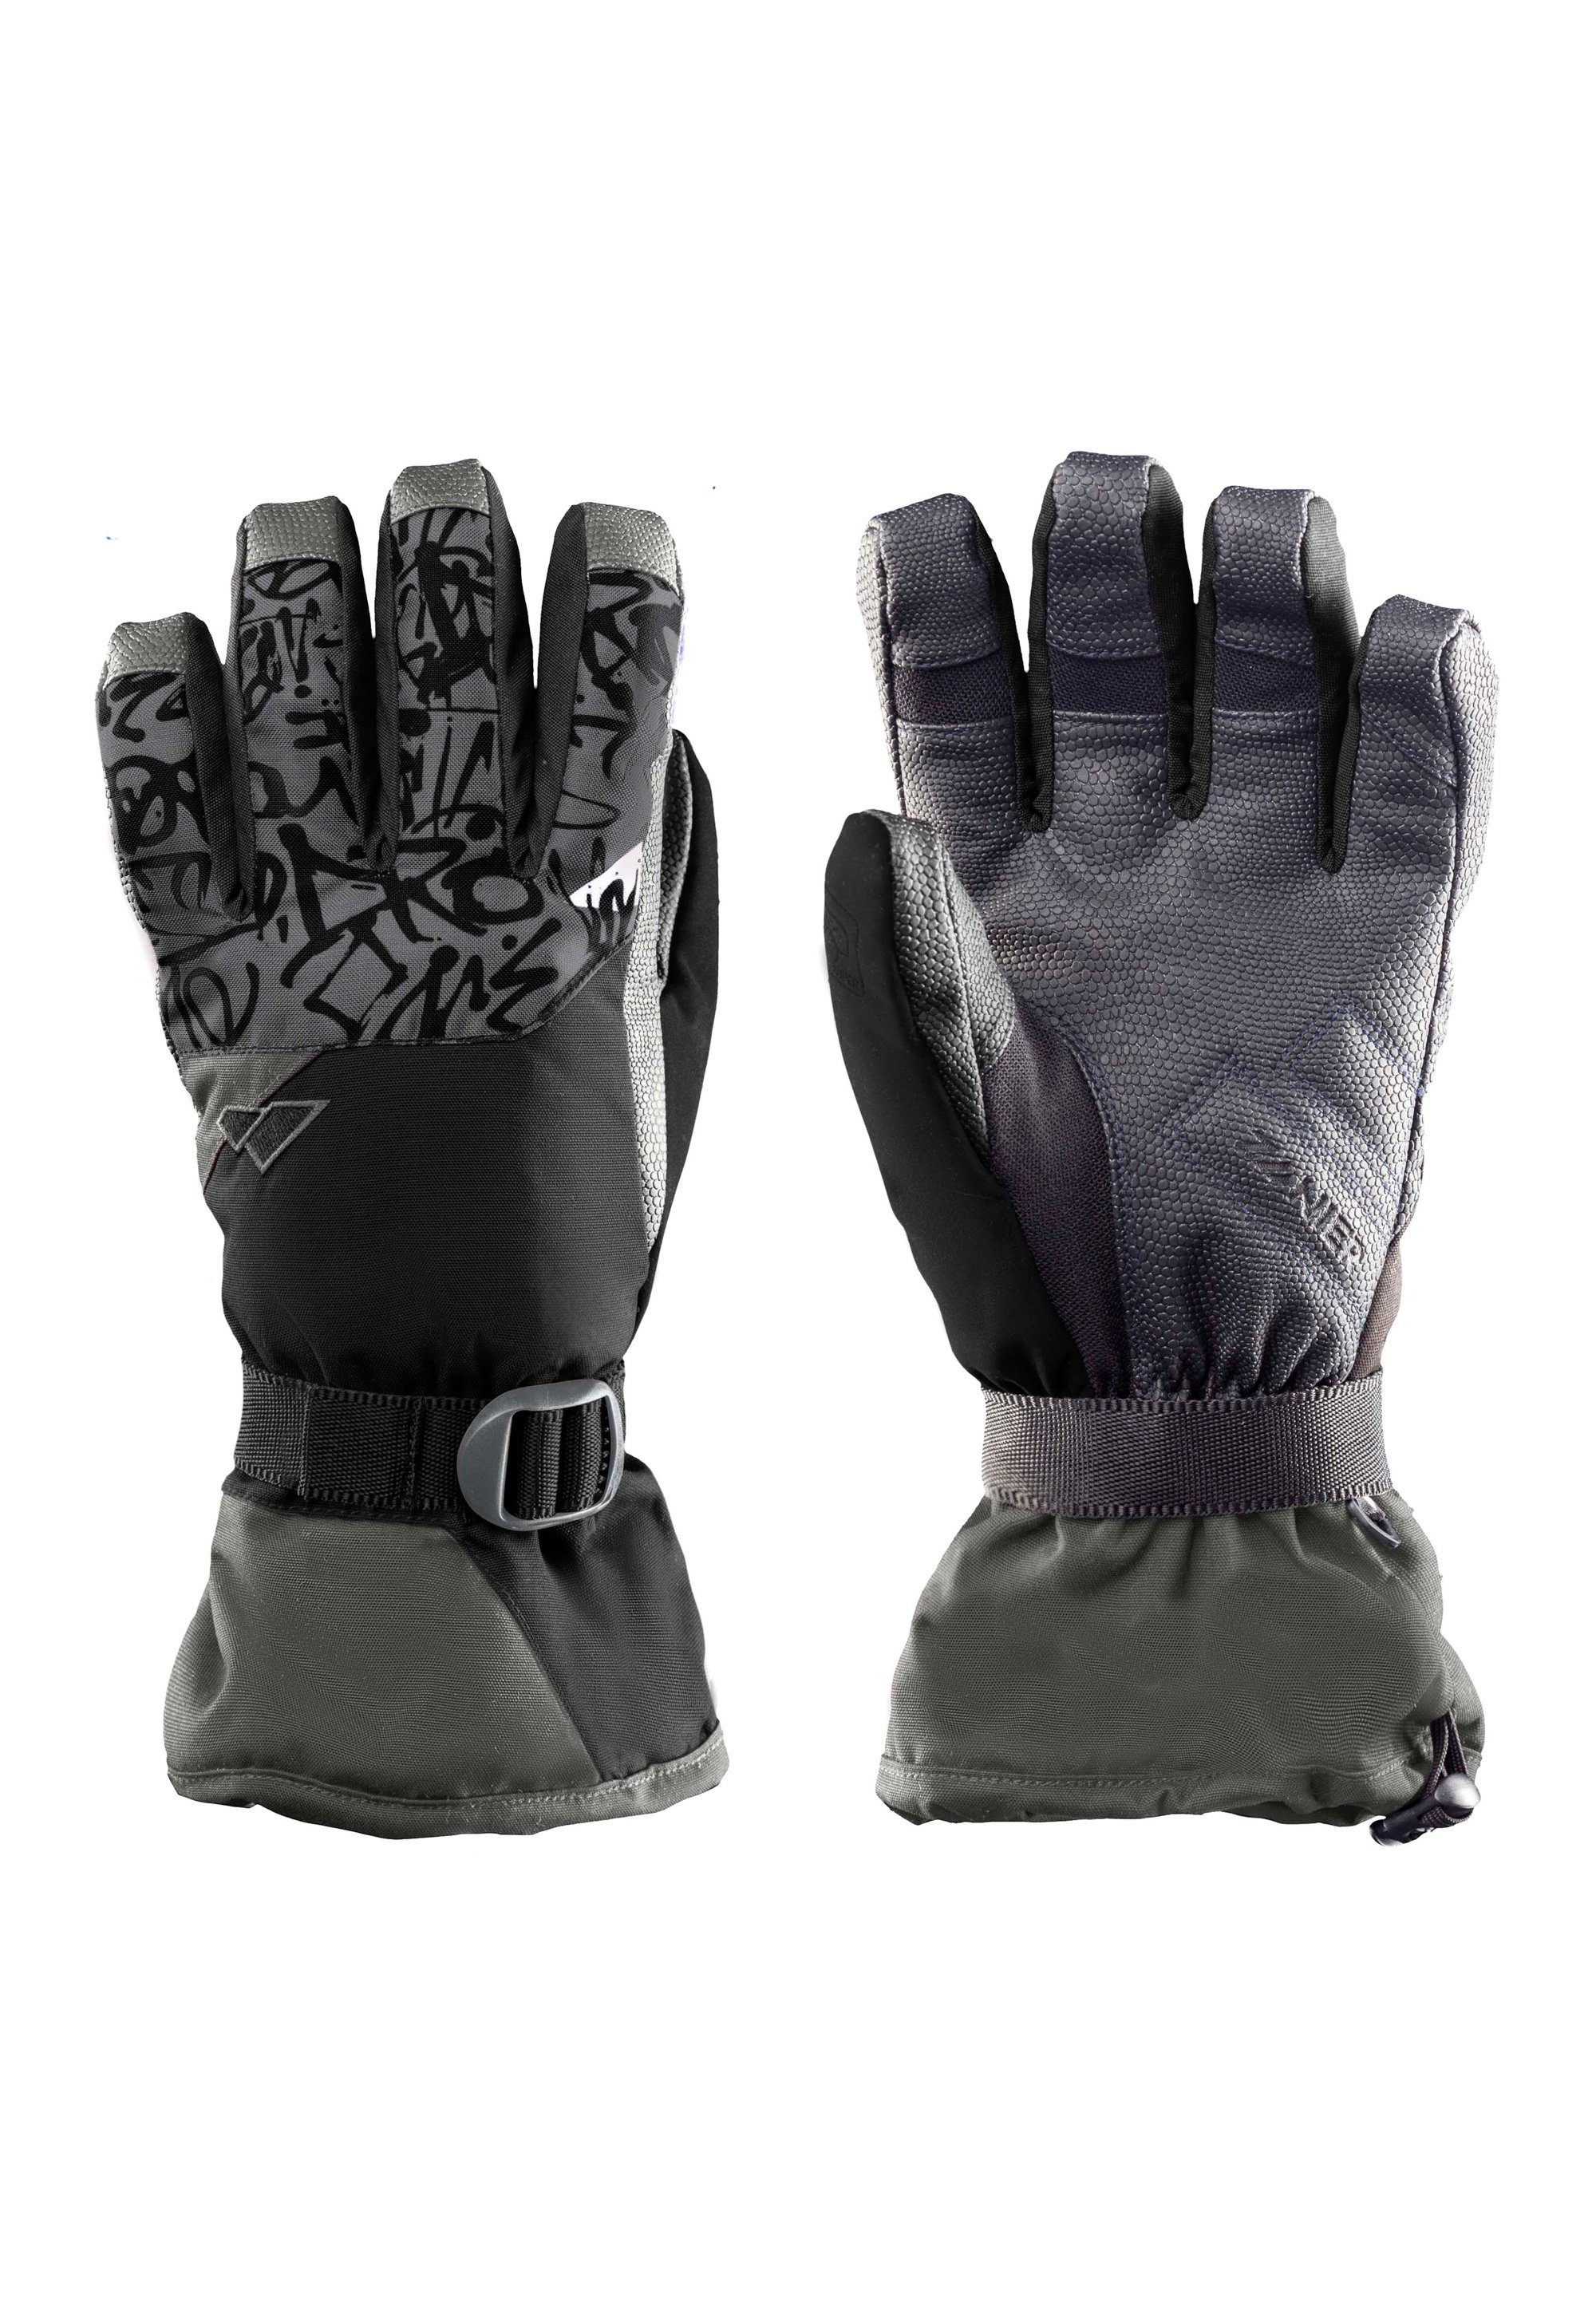 Zanier Multisporthandschuhe GAP.STX gloves black We focus on